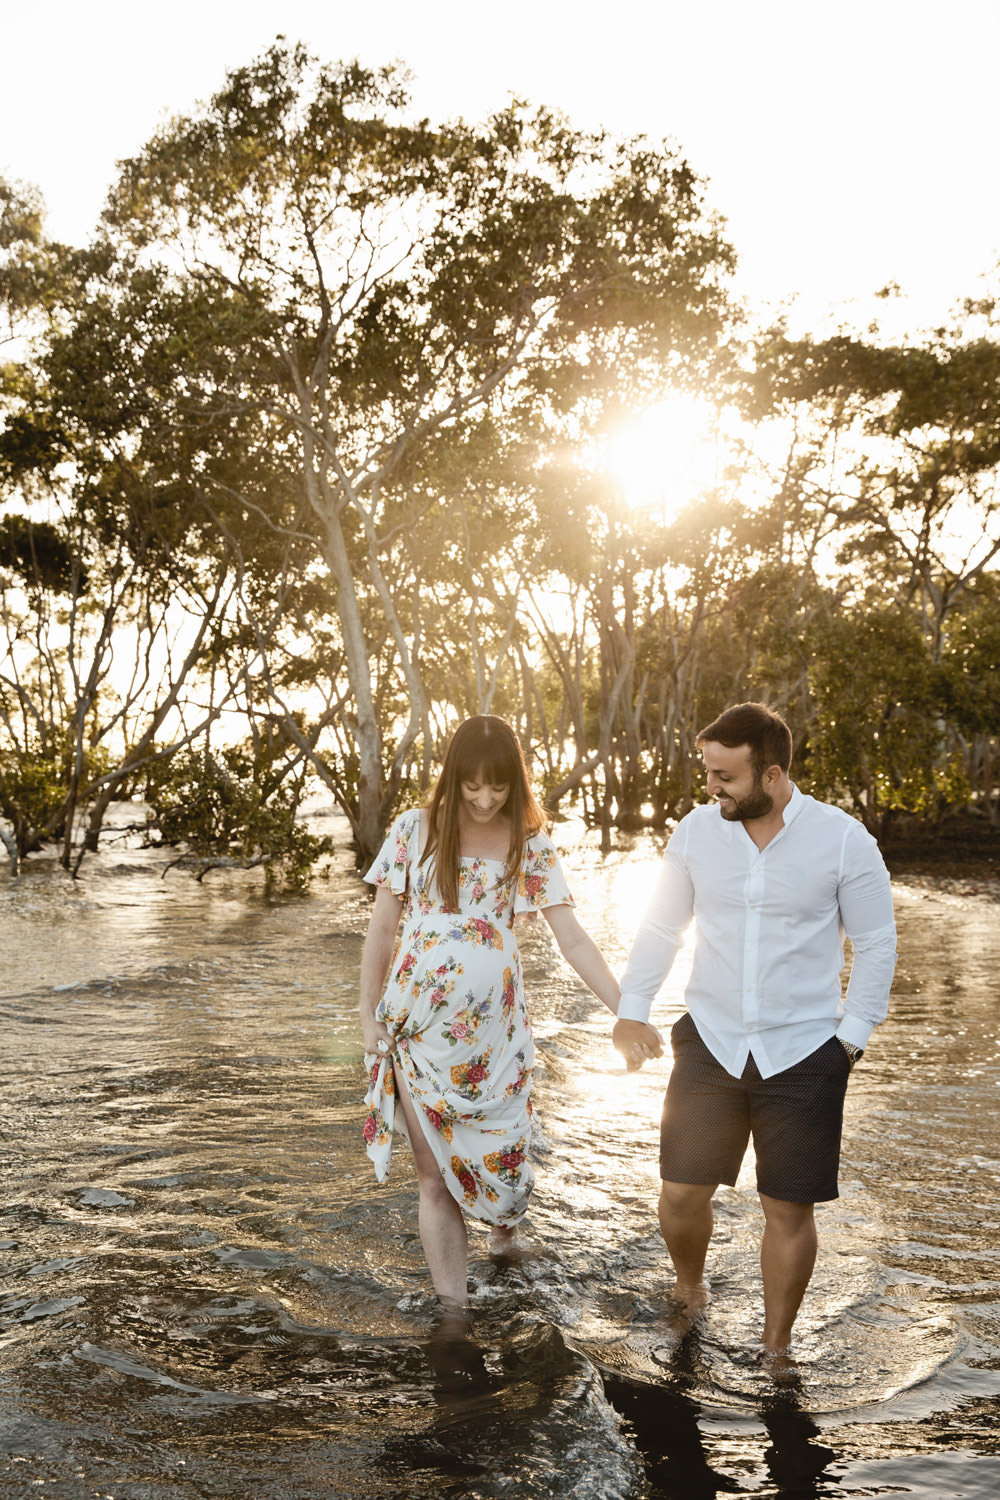 maternity-session-at-sunrise-over-water-walking-joyful_Maternity_Newborn_Family-Photography-Packages_Beach_Brisbane-GoldCoast-Natural-1